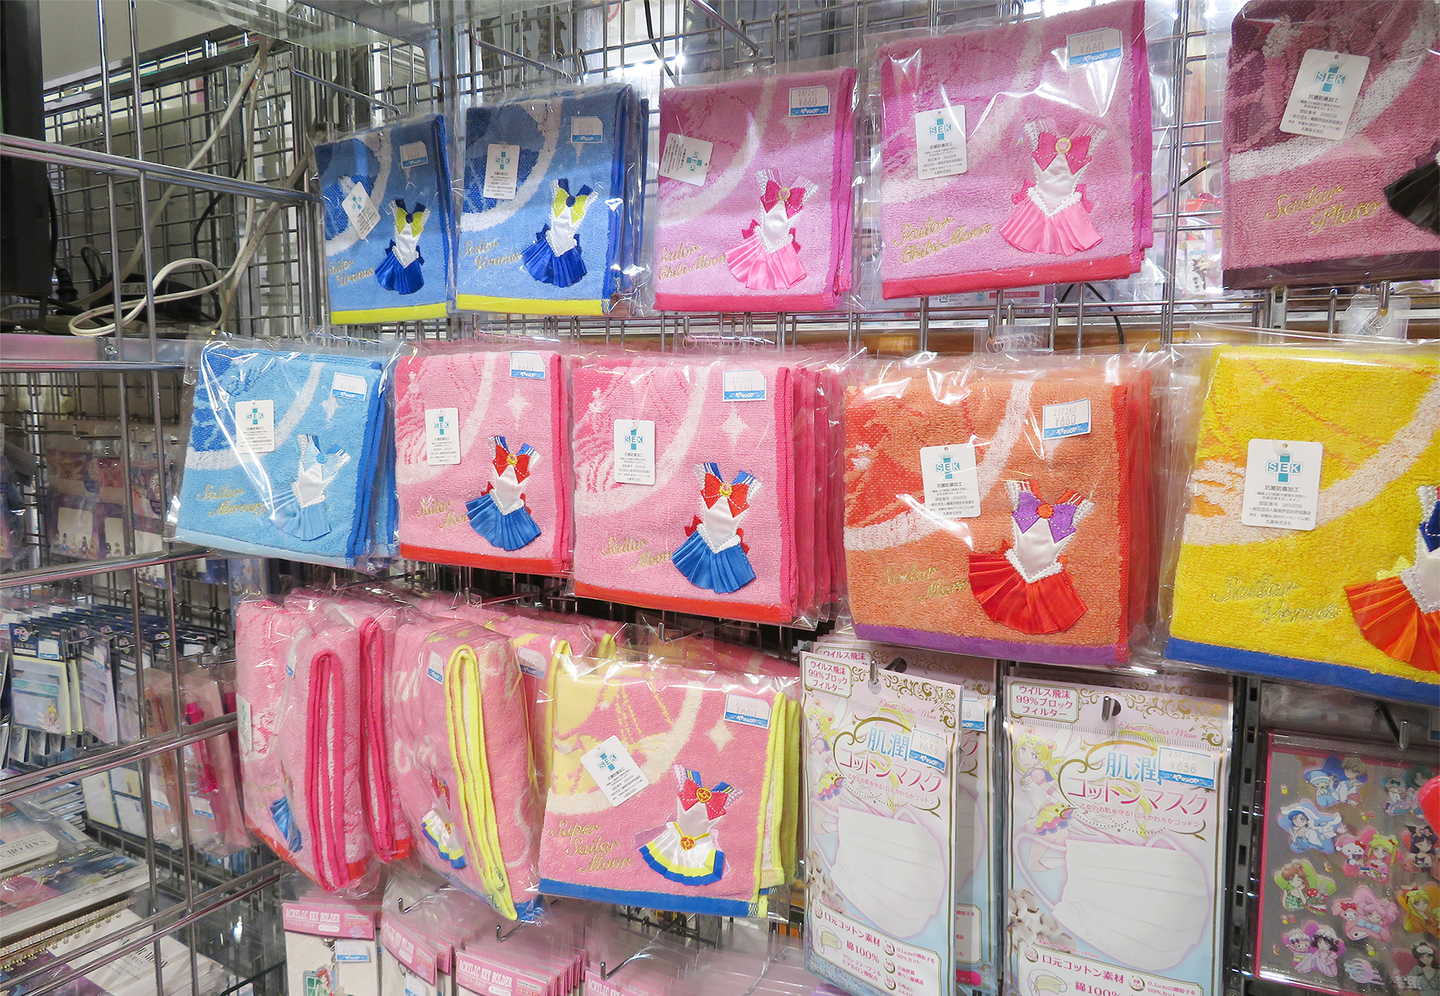 Images of Sailor moon merchandise sold at YAMASHIROYA1